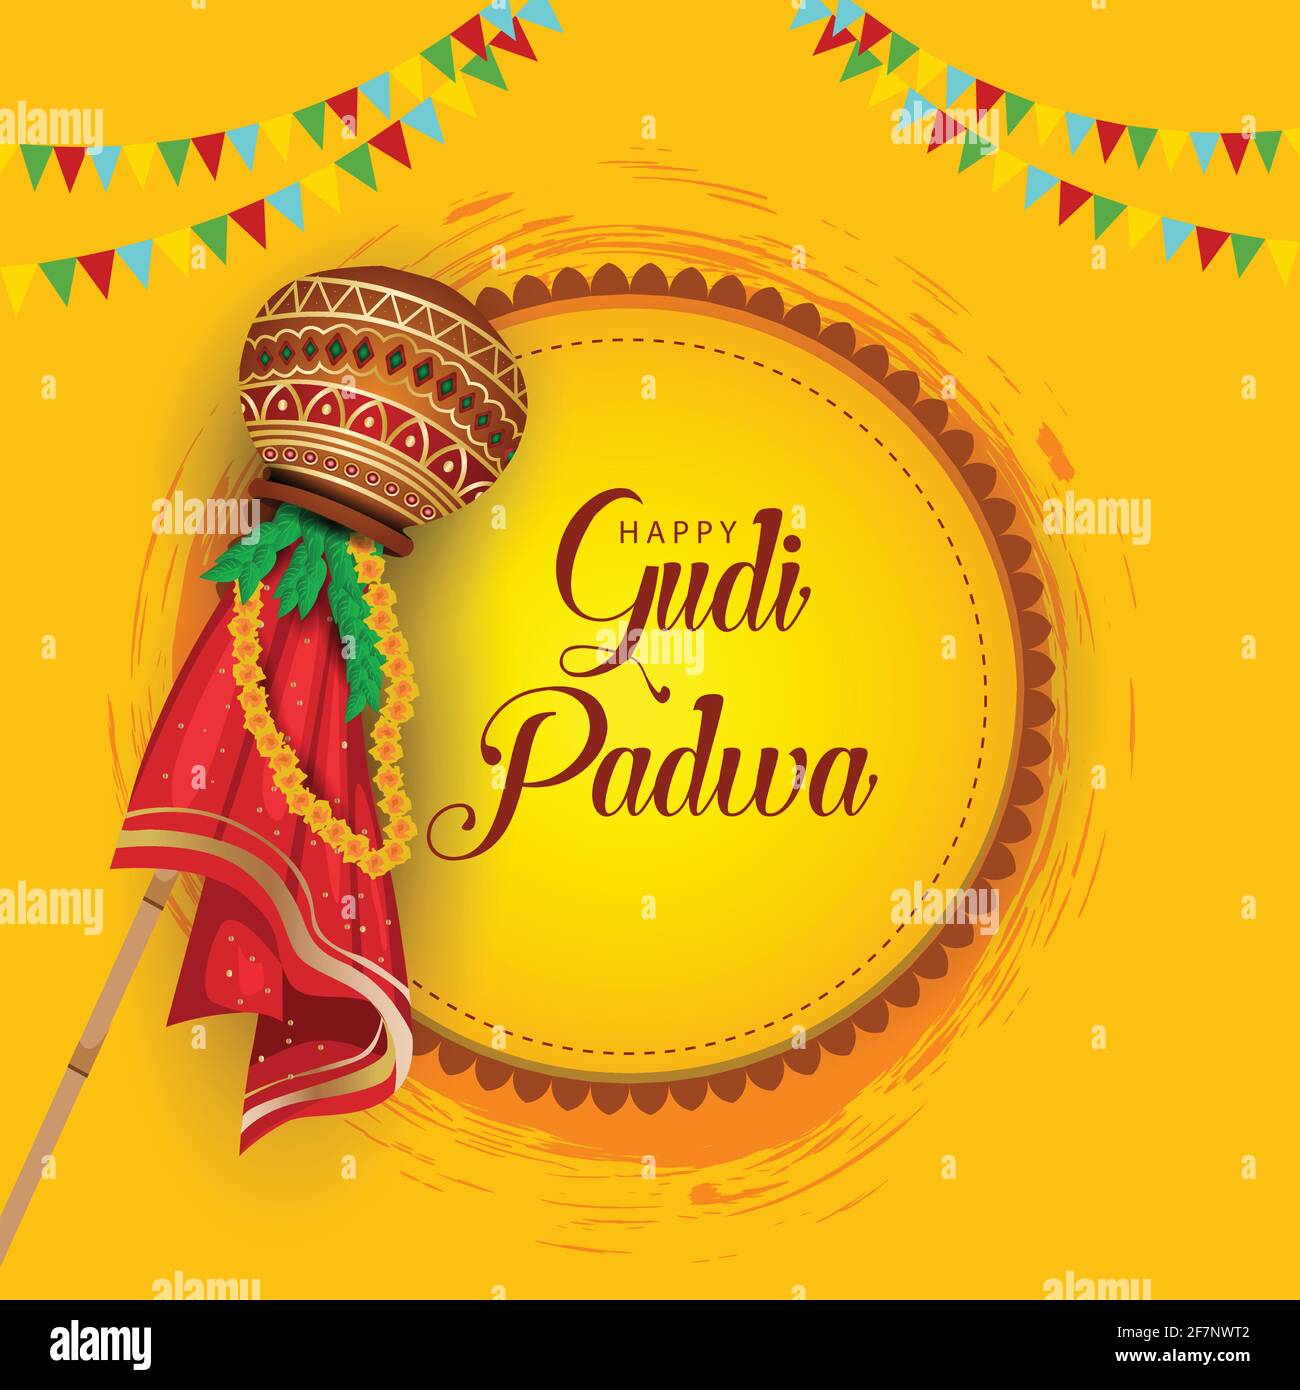 decorated background of happy Gudi Padwa celebration of India ...